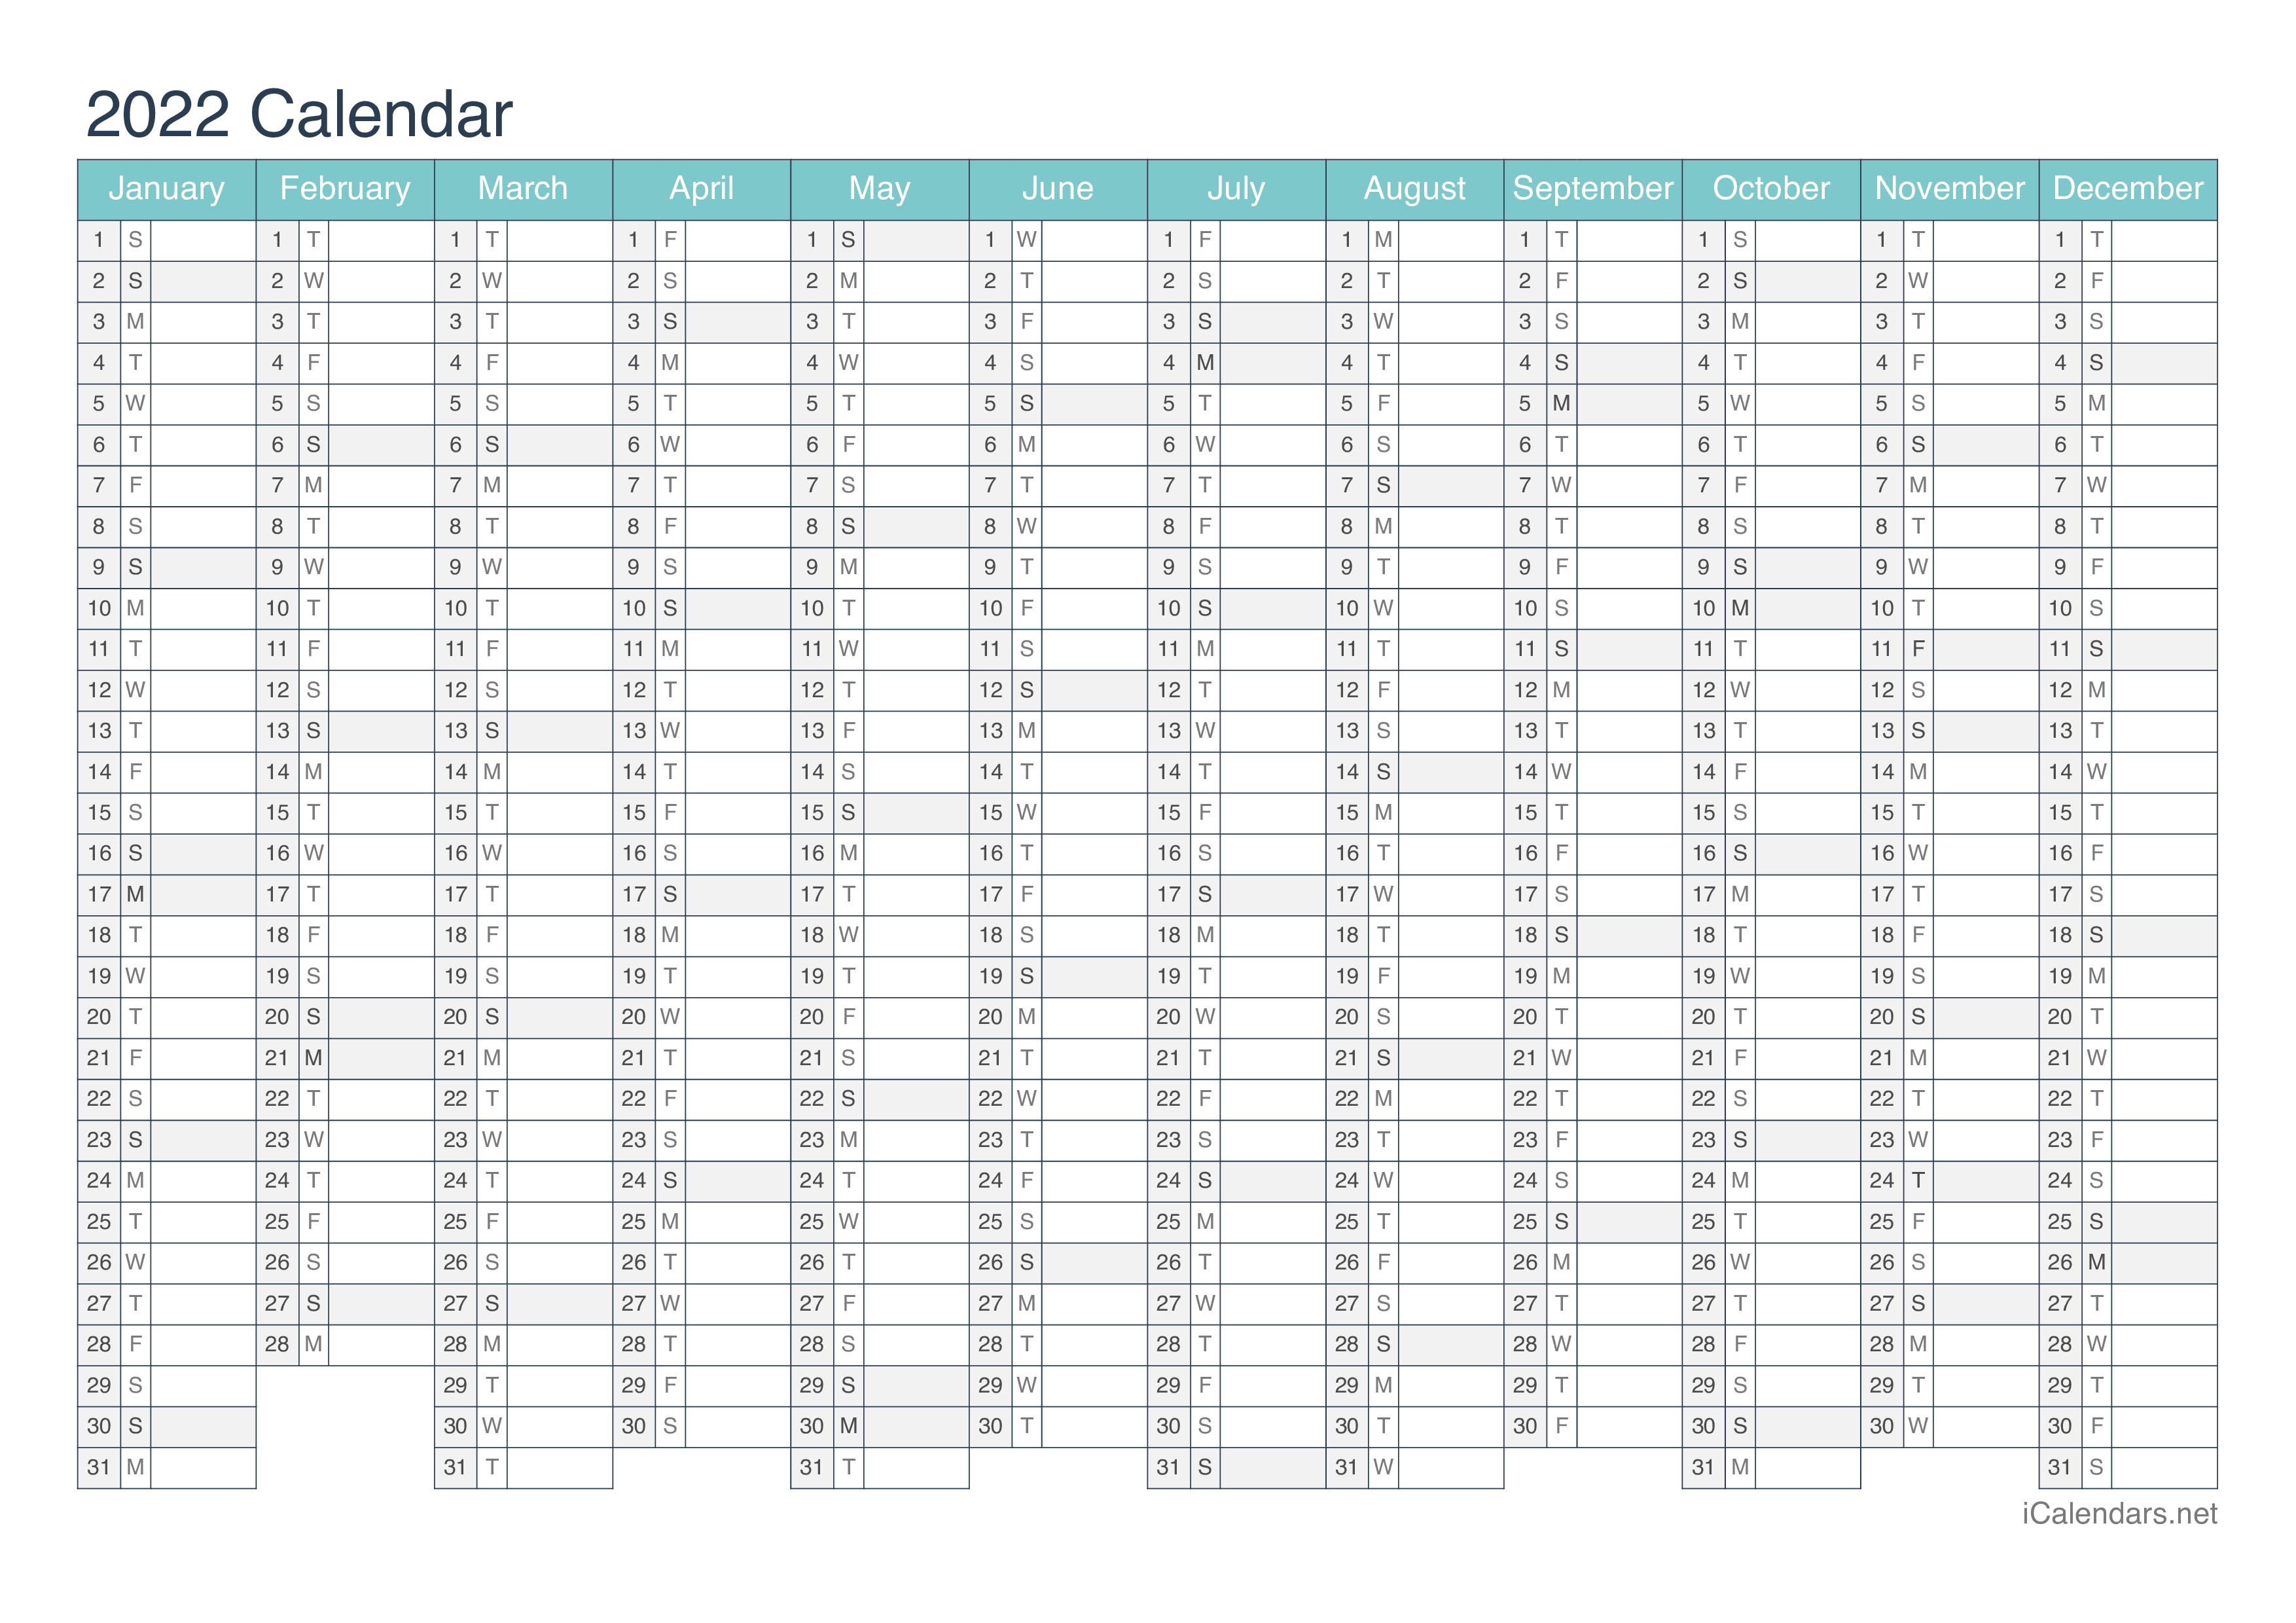 Libreoffice Calendar 2022 2022 Printable Calendar - Pdf Or Excel - Icalendars.net